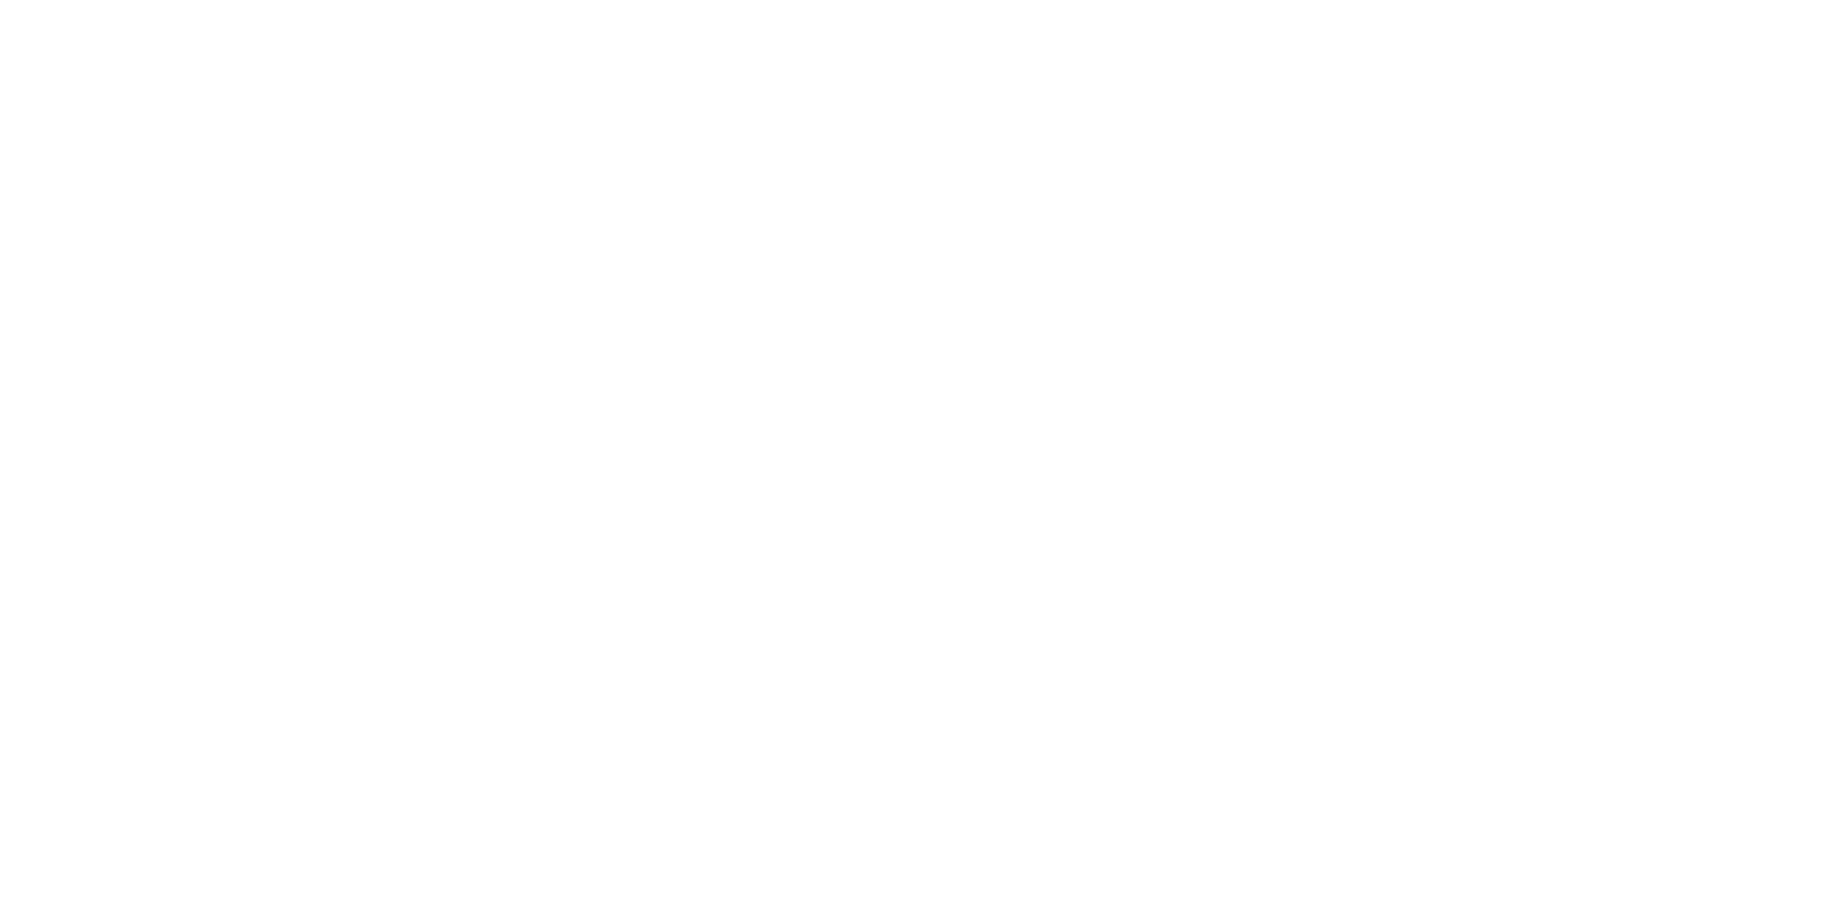 The International Railway Heritage Consultancy